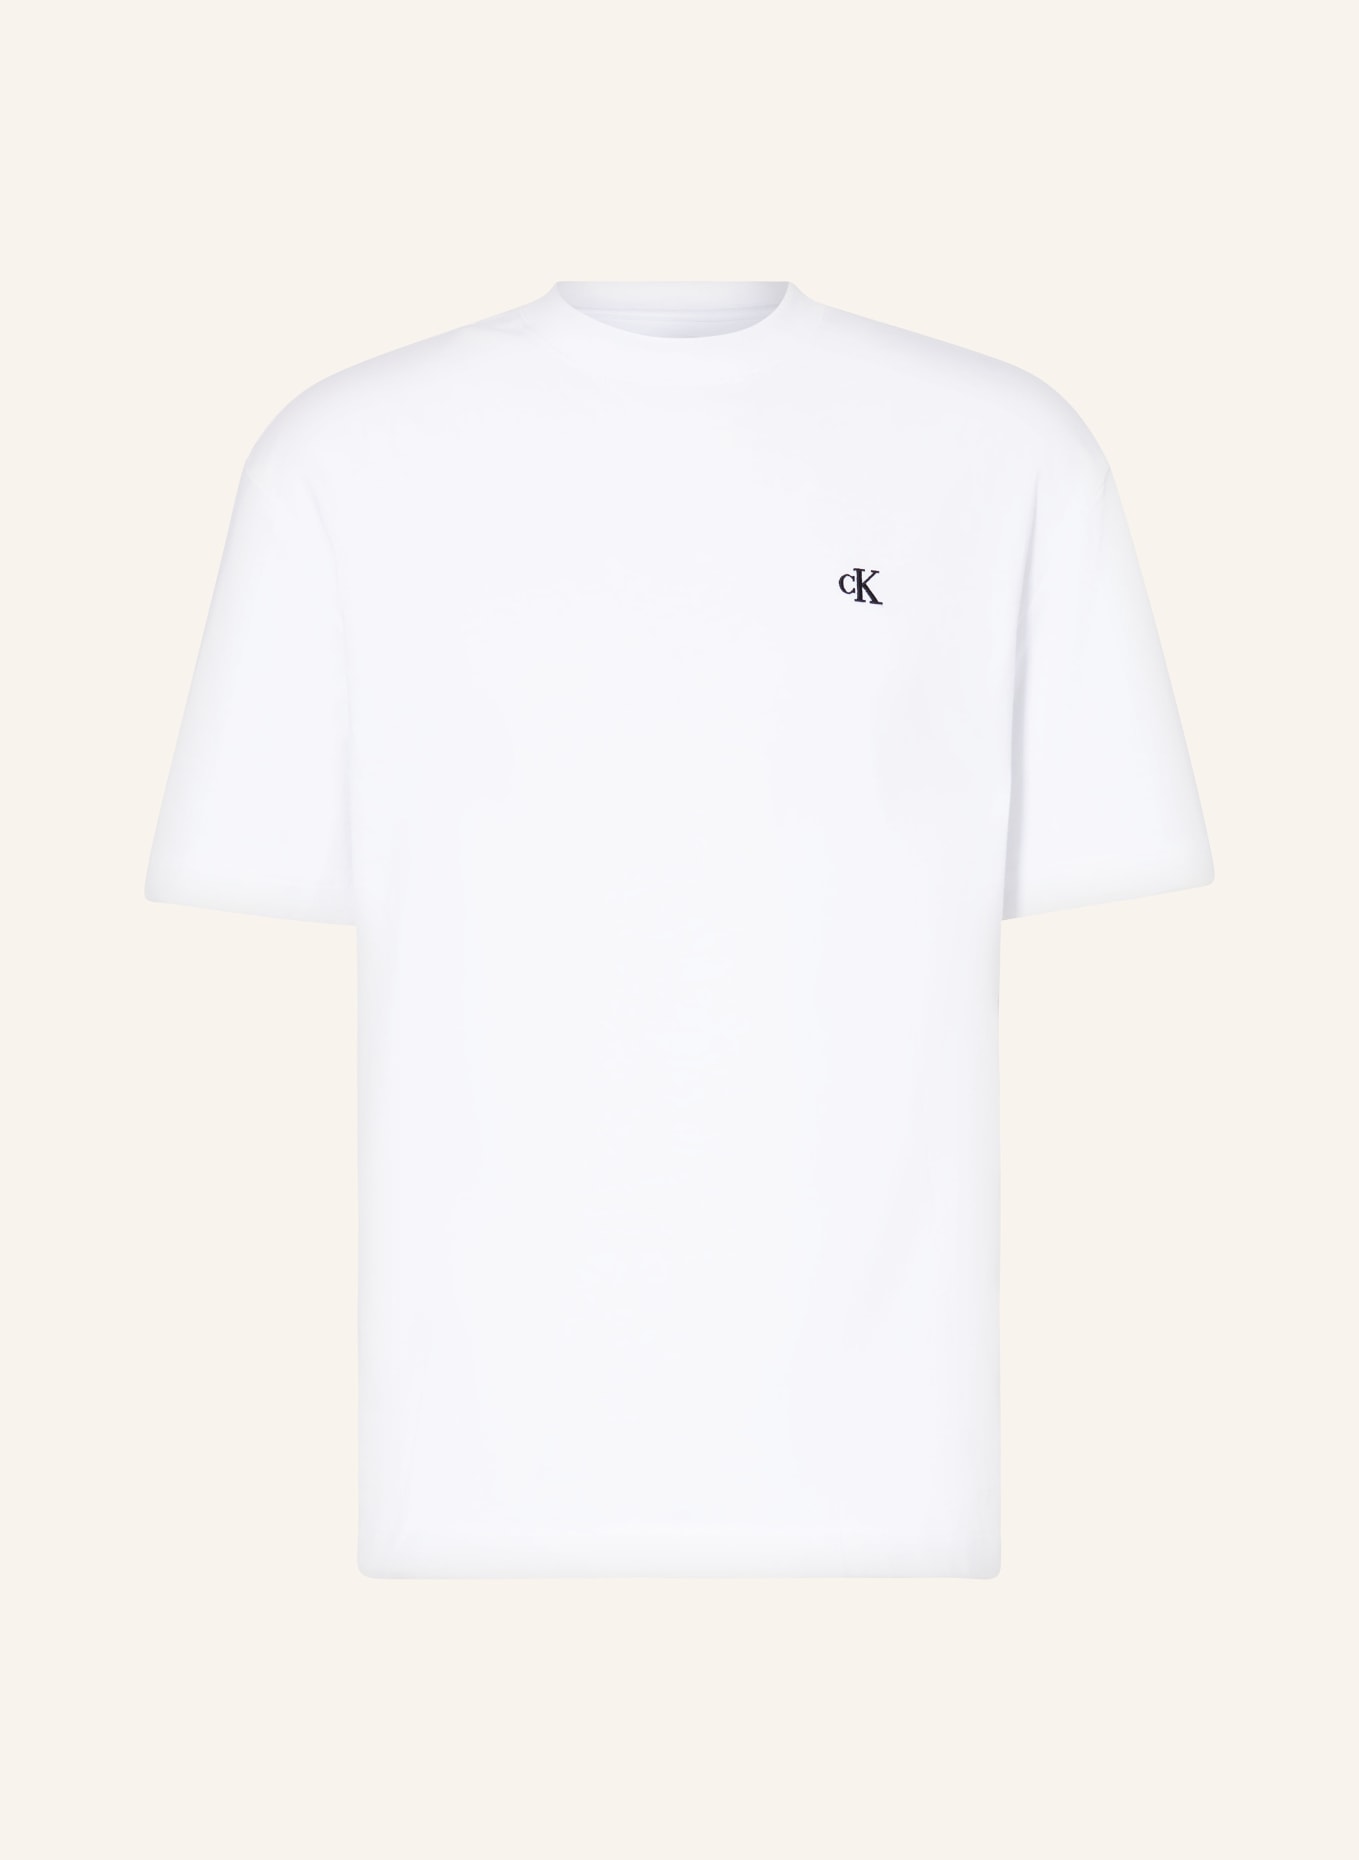 Calvin Klein T-Shirt, Farbe: WEISS (Bild 1)